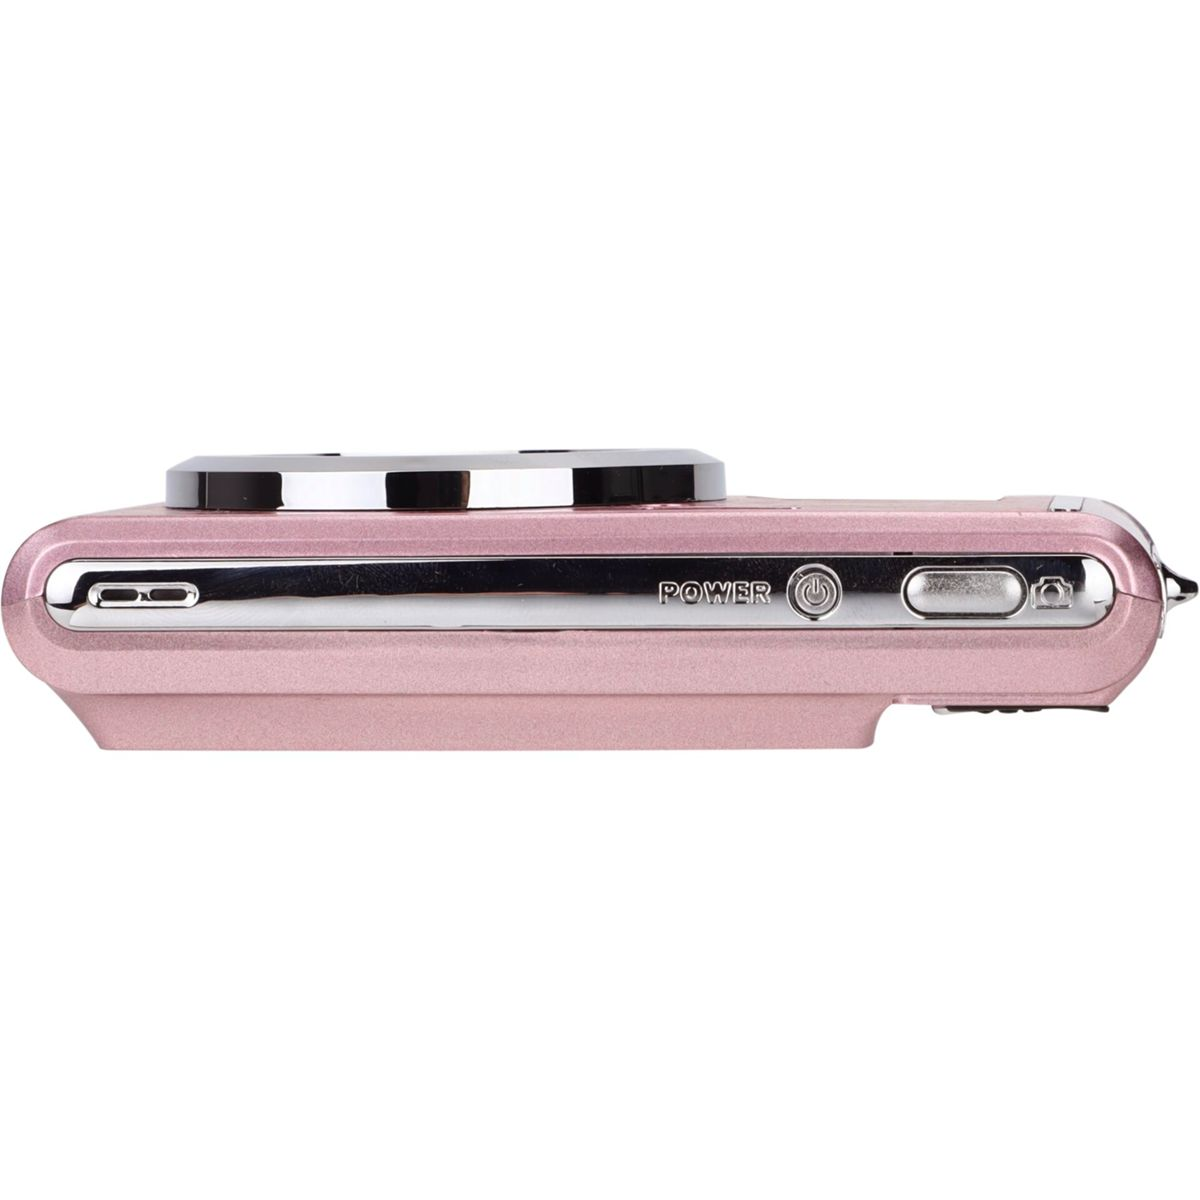 Compact Digitalkamera pink Cam AGFAPHOTO DC5200 pink